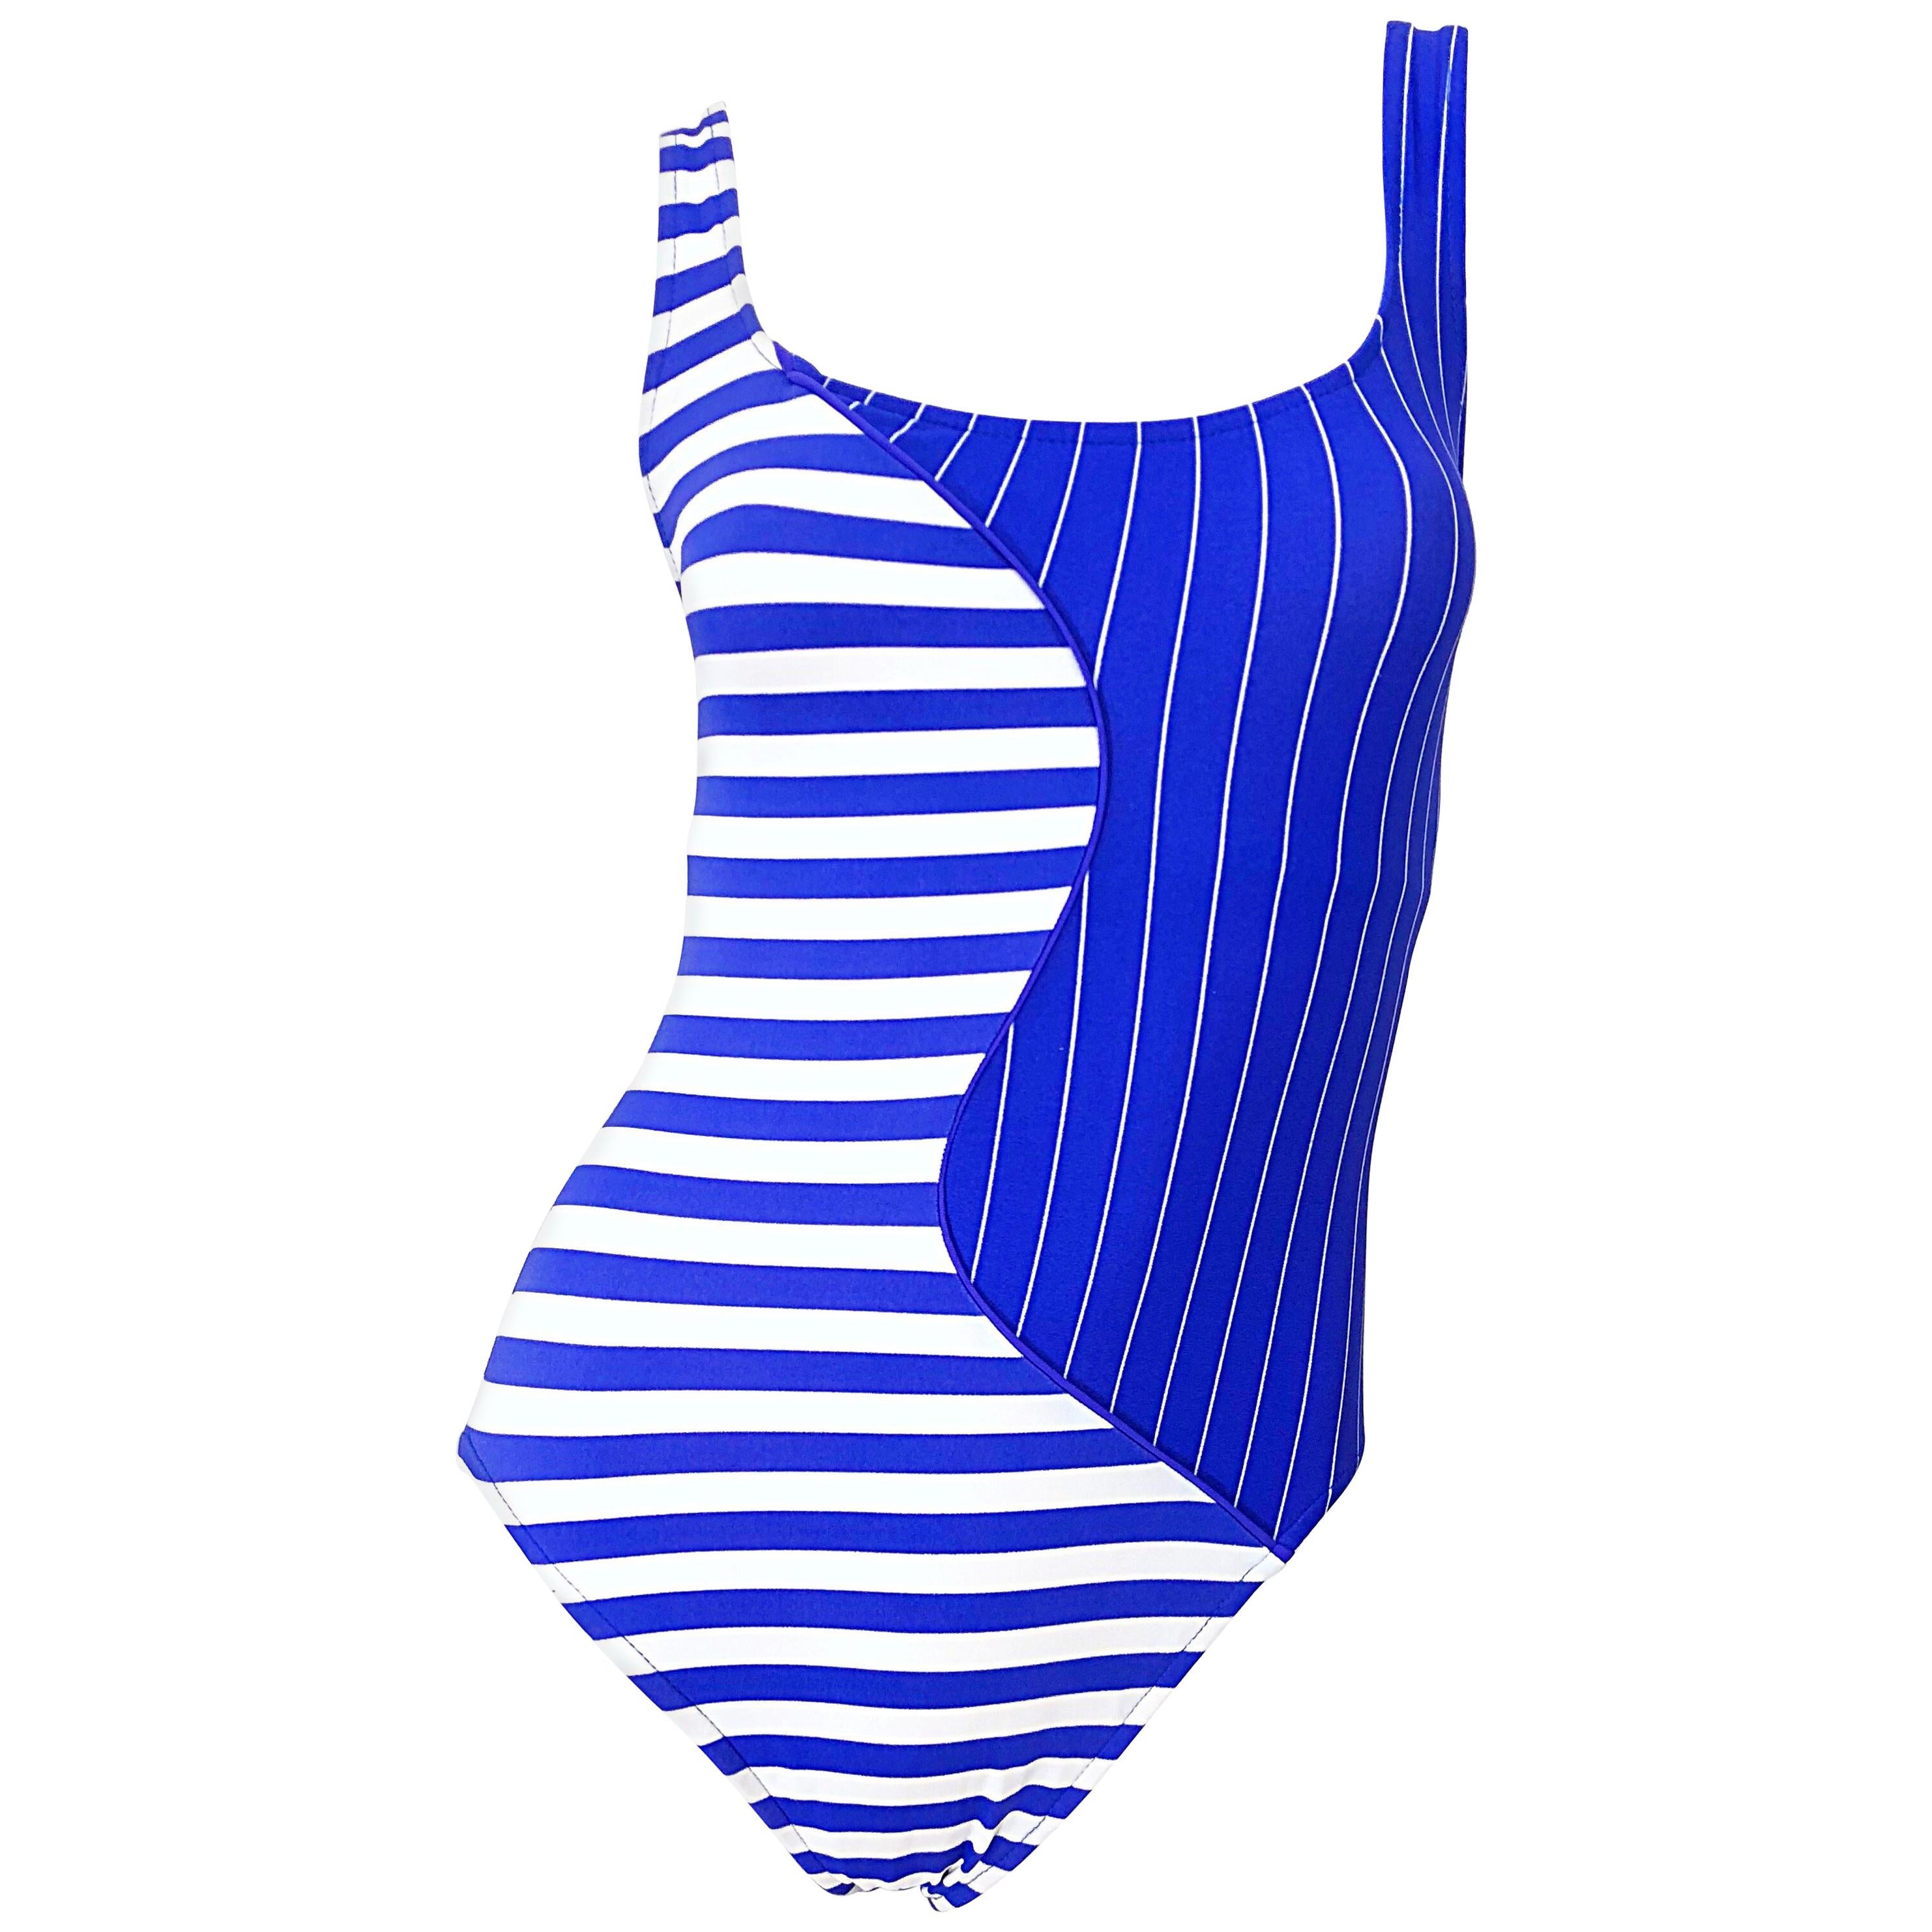 Vintage Bill Blass 1990s Nautical Blue White Striped One Piece Swimsuit Bodysuit